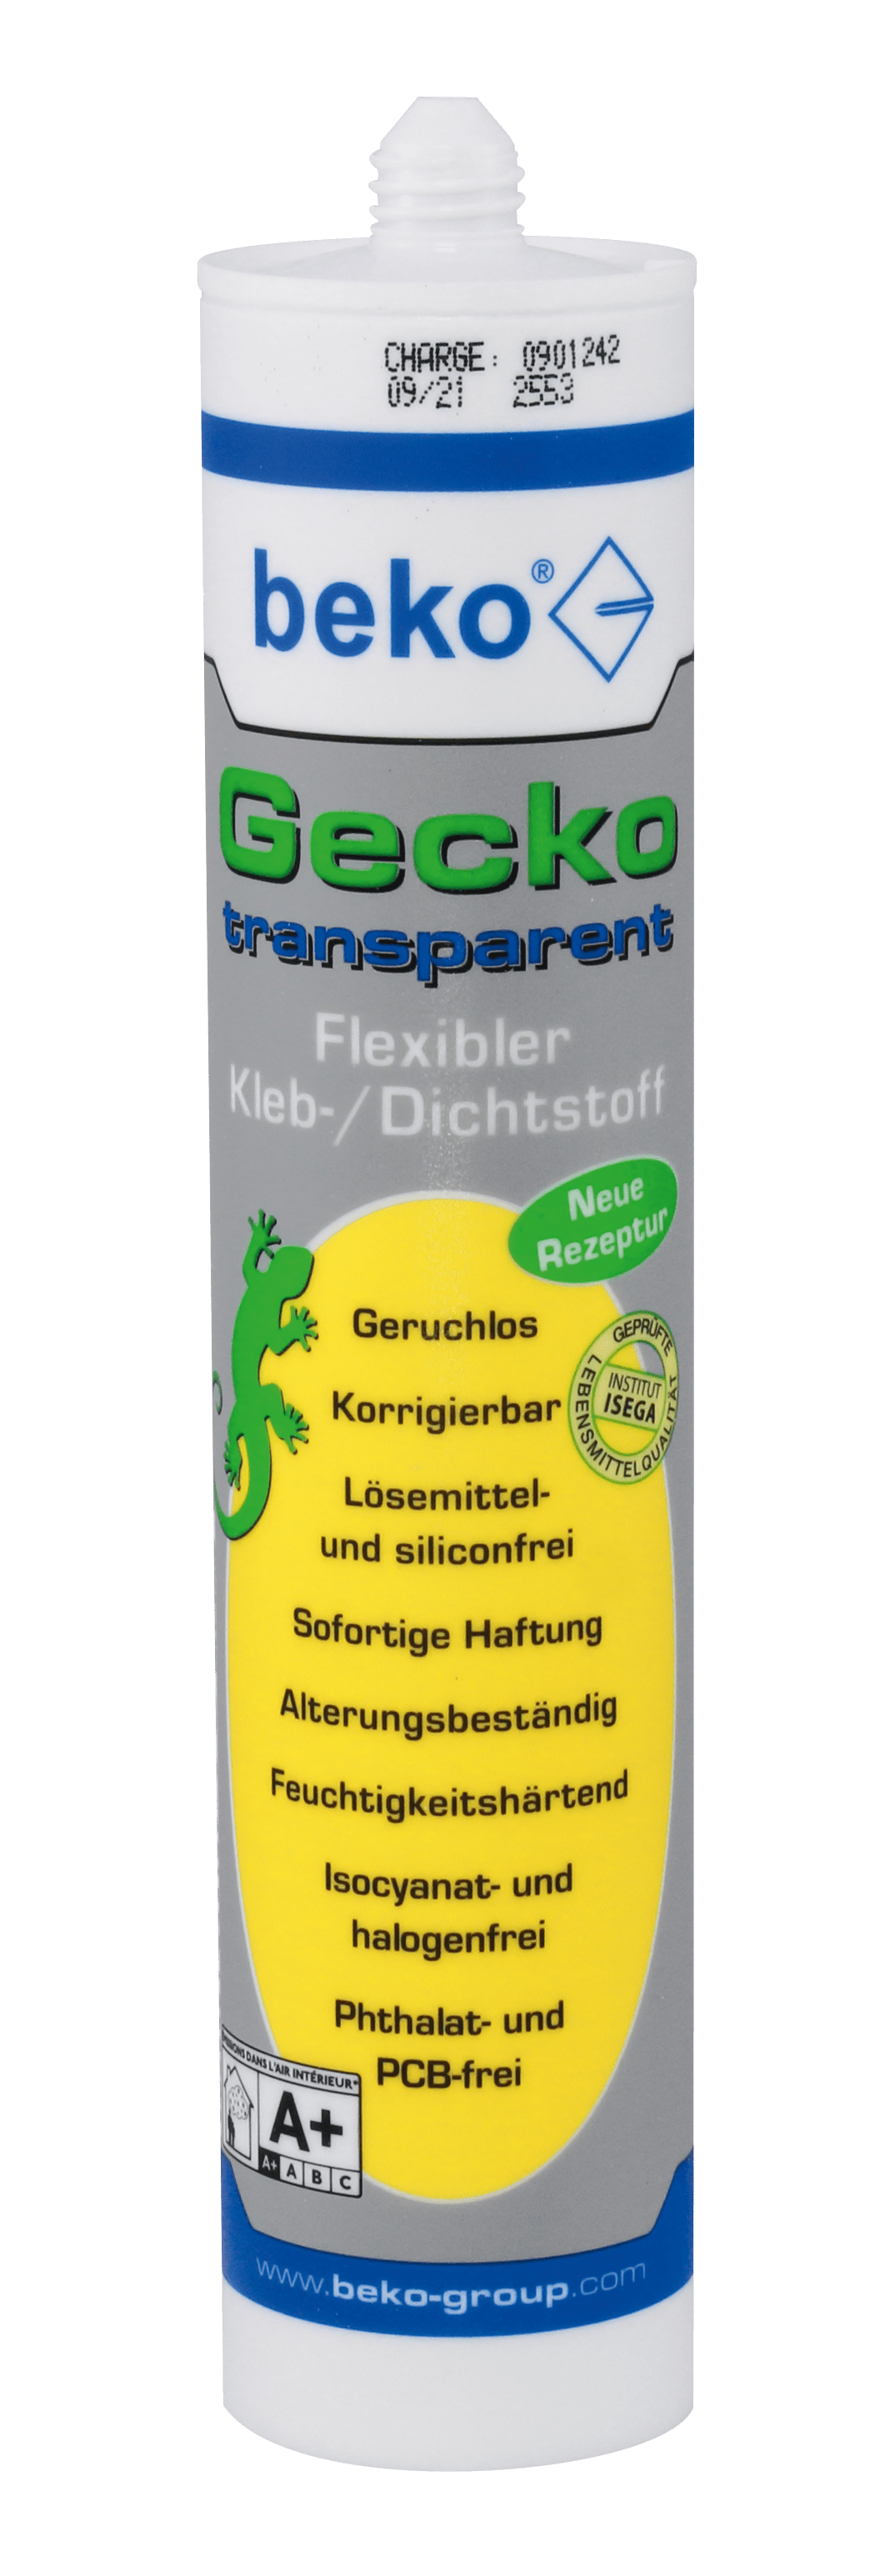 Beko Gecko 290 ml TRANSPARENT Kleb-/Dichtstoff